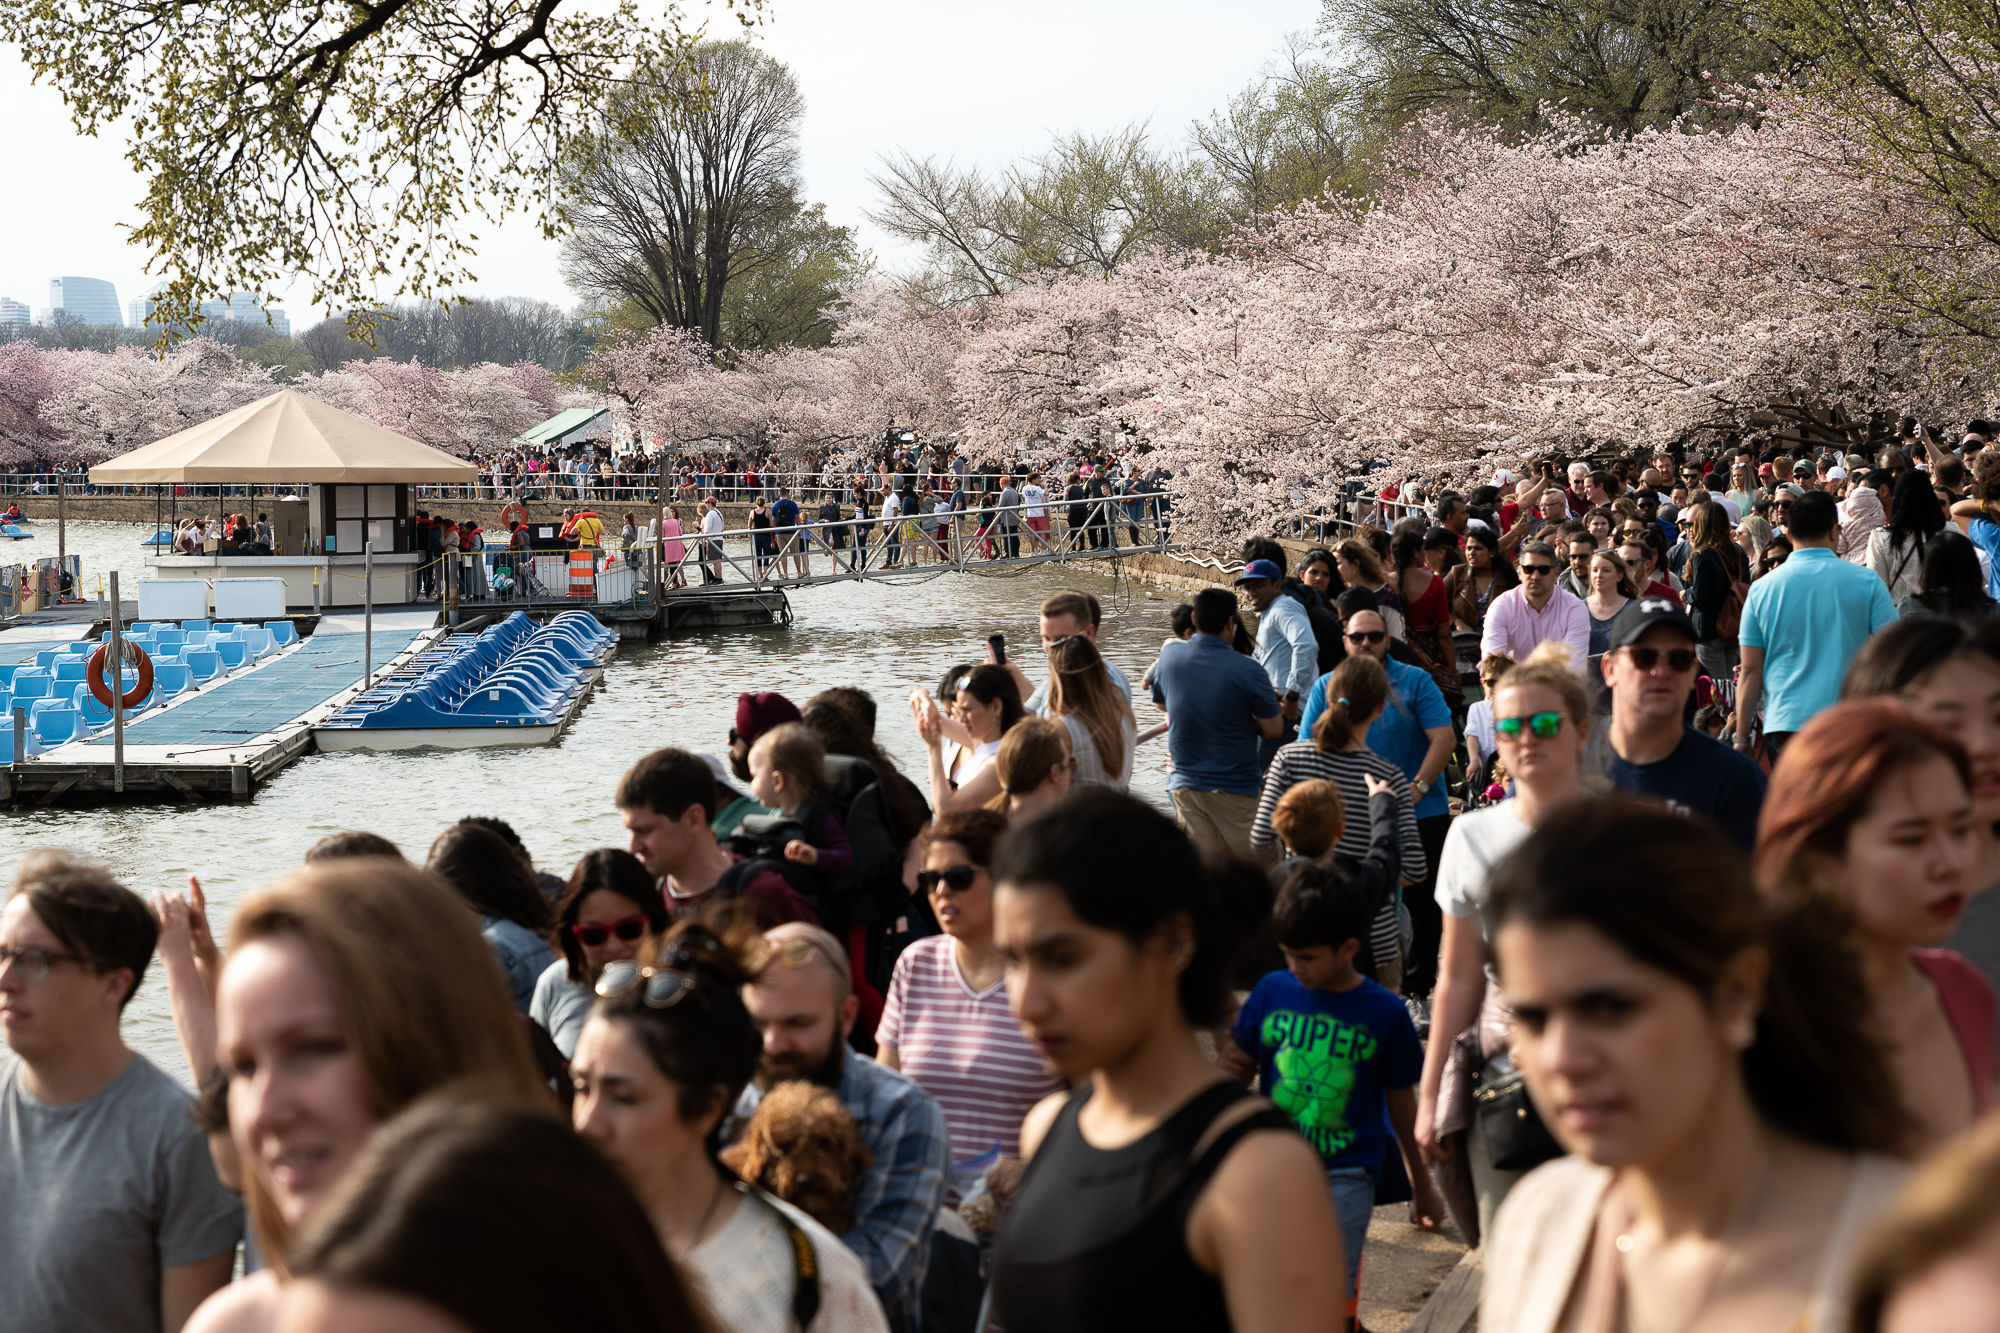 Crowd at National Cherry Blossom Festival (Sakura Matsuri